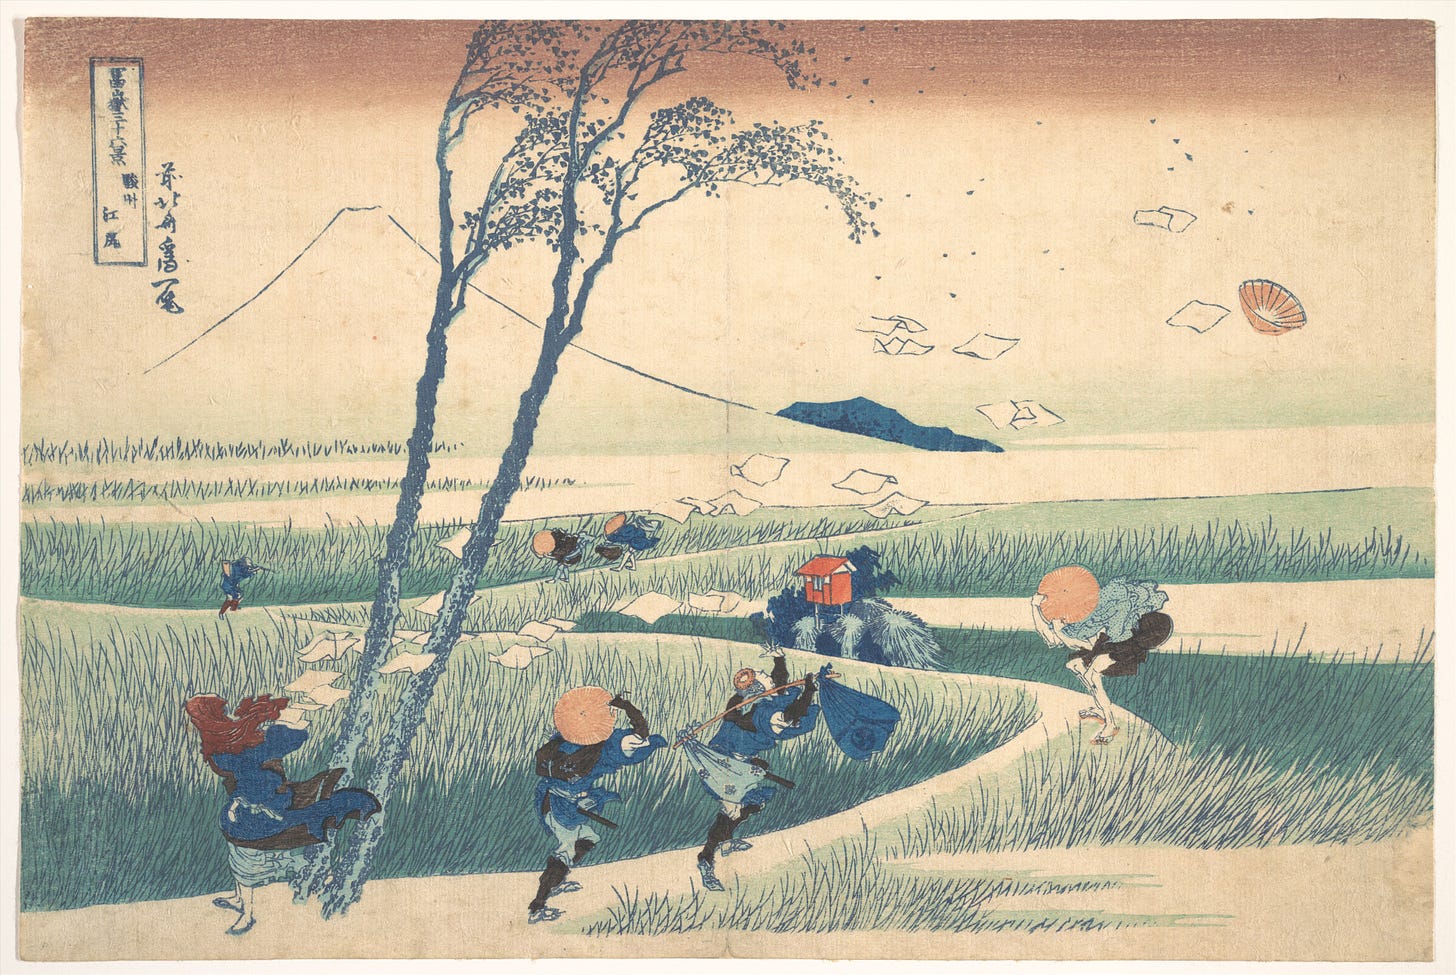 Woodcut by Katsushika Hokusai